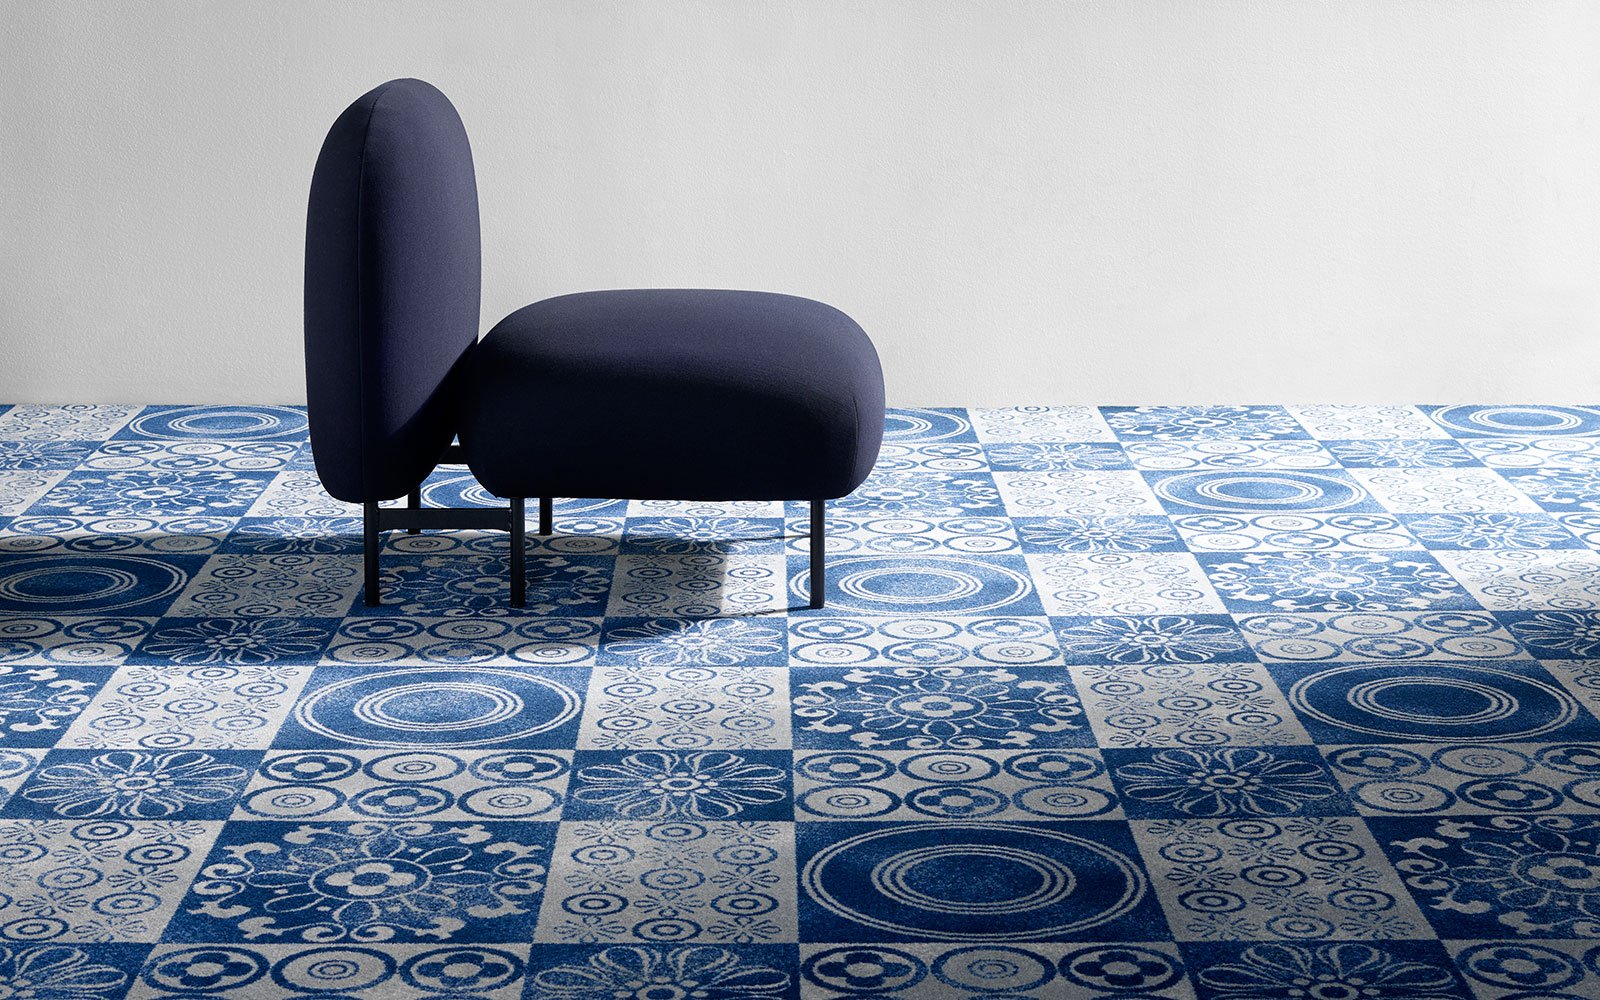 Teppich in Keramikfliesen Optik in blau Tönen